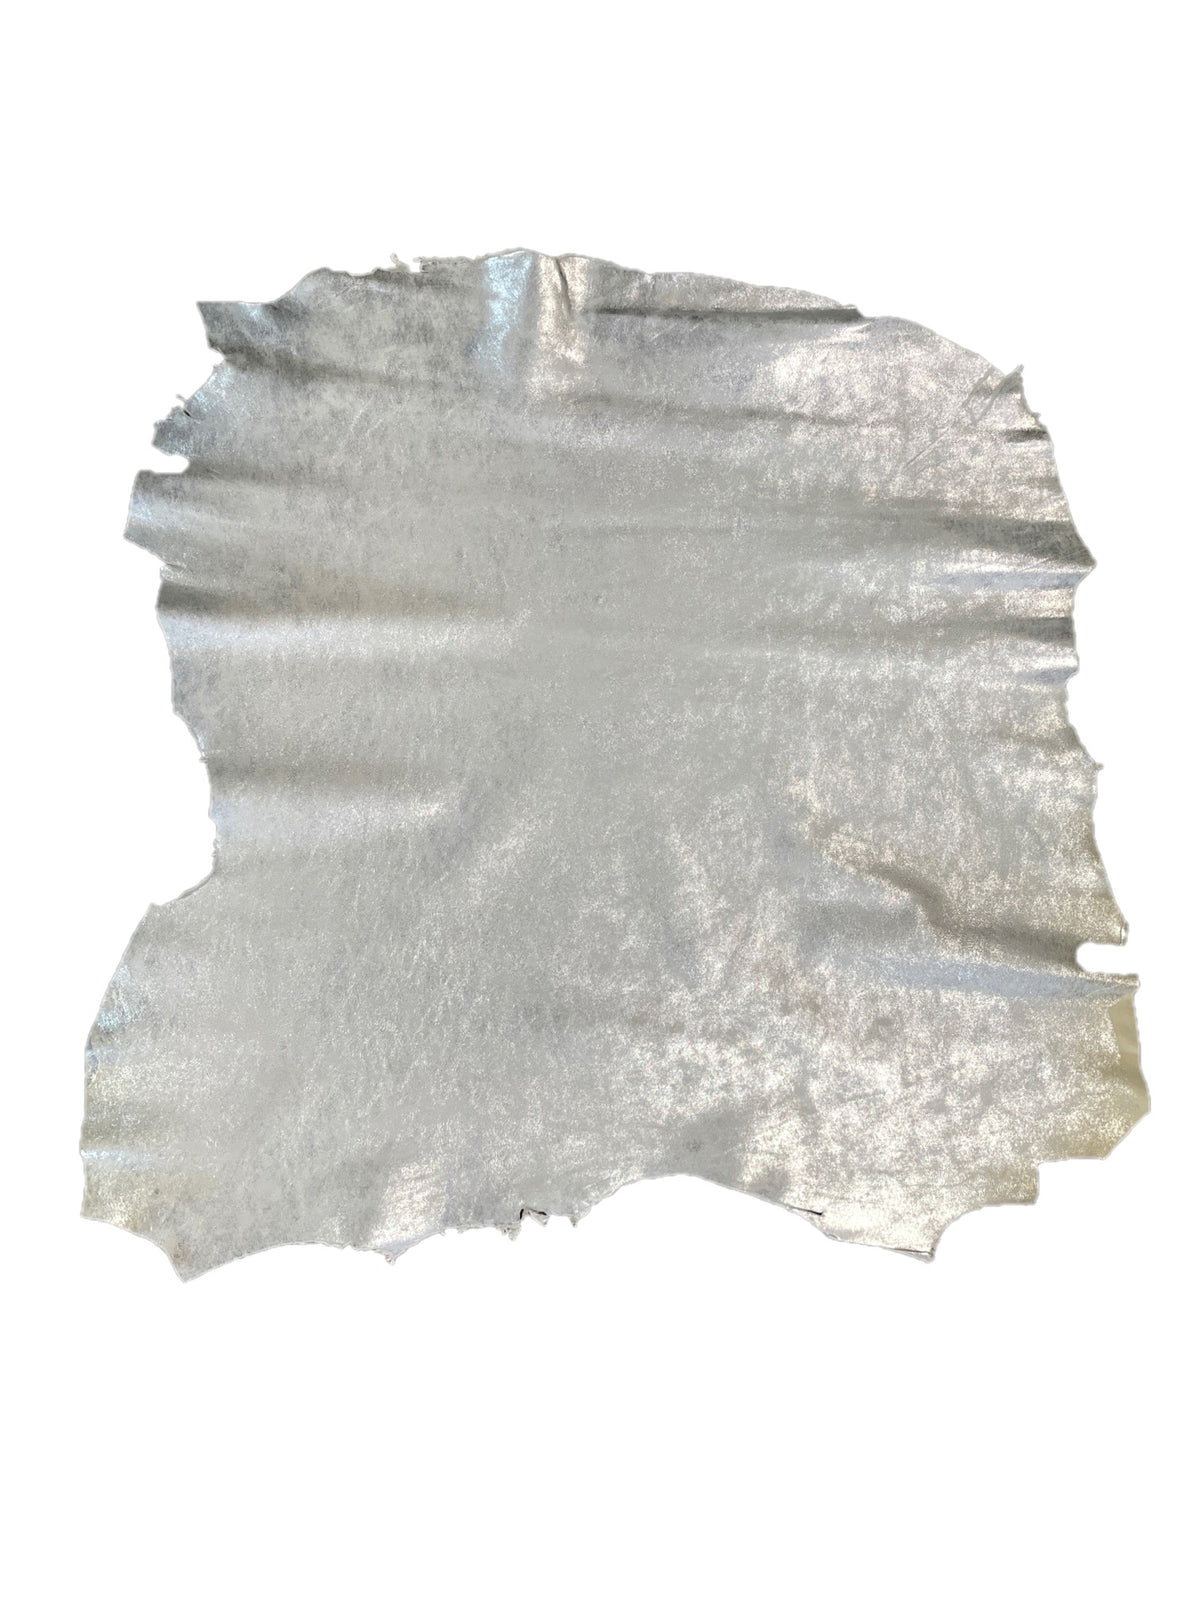 Marbled Goat Skin | Silver | 0.9mm  | 5 sq.ft | $45 ea.